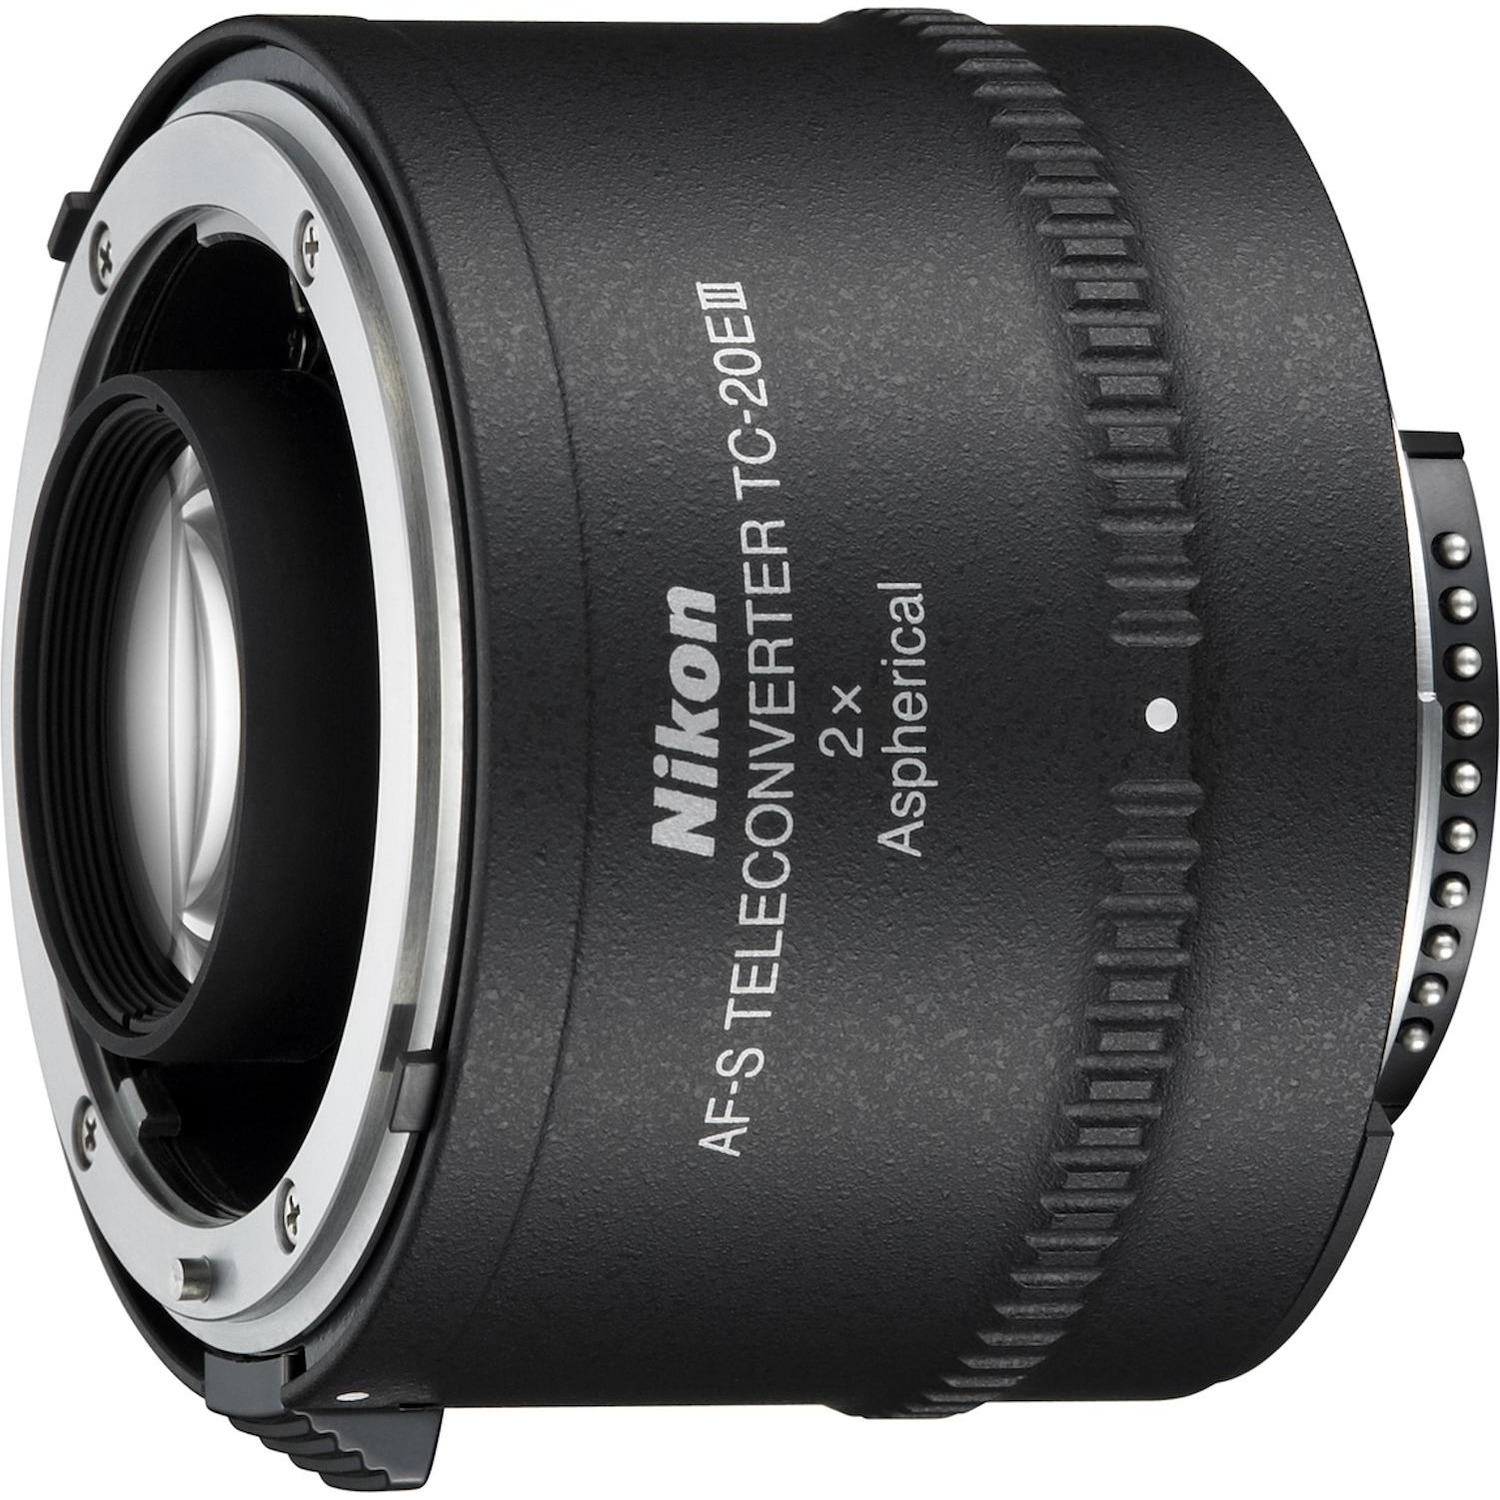 Immagine per Moltiplicatore di focale Nikon TC-20E AF-S III da DIMOStore